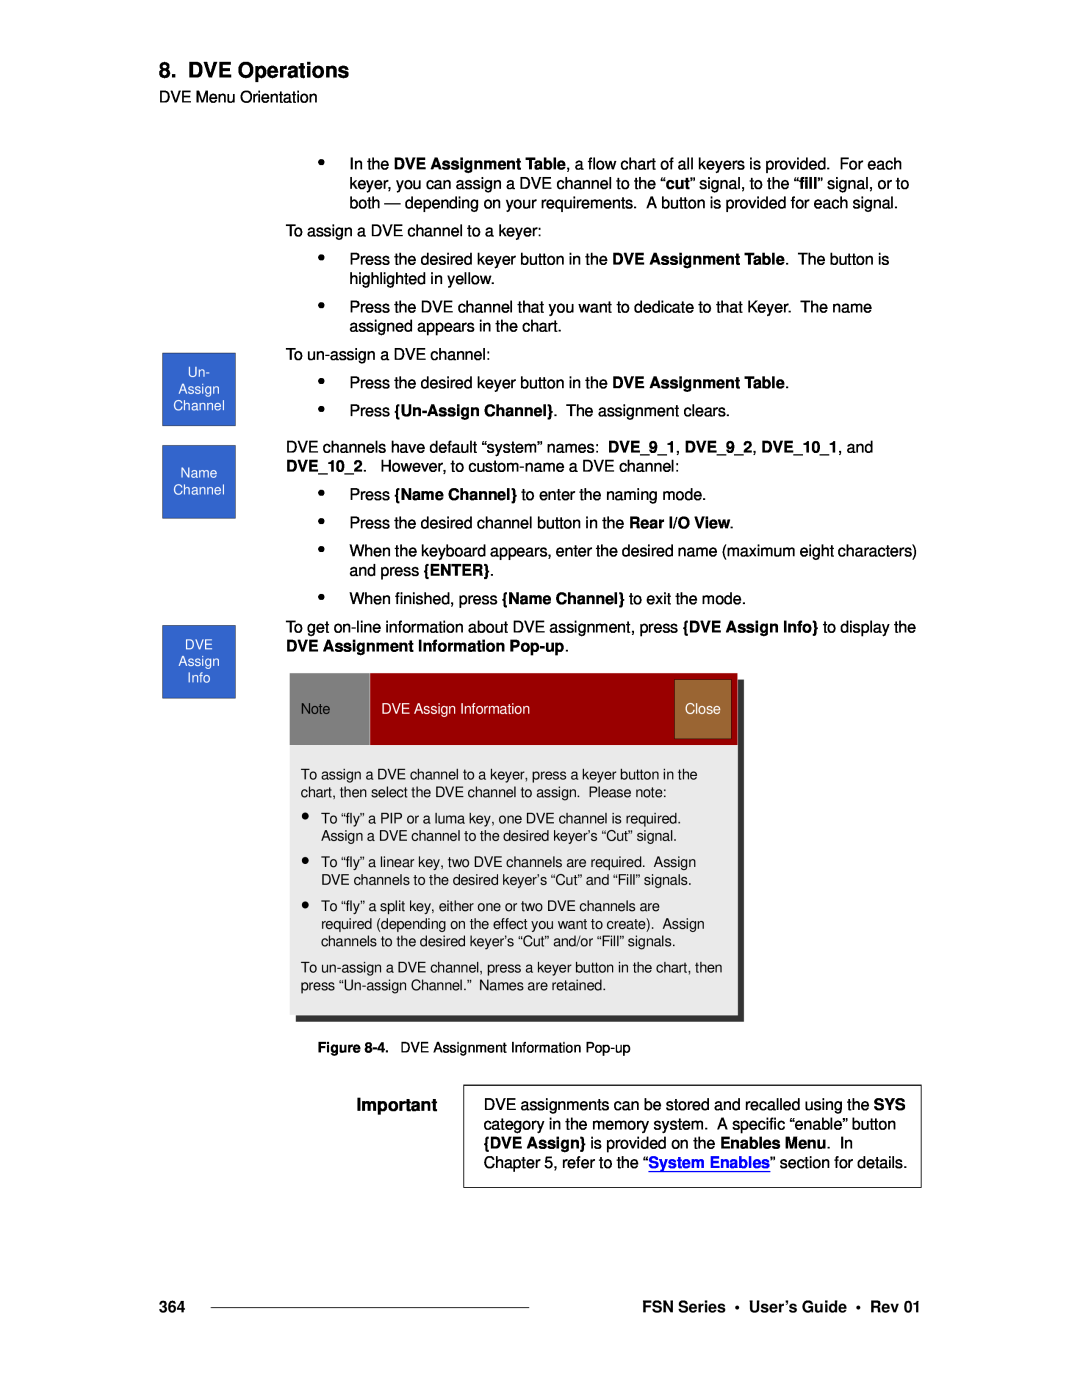 Barco 26-0702000-00 manual DVE Operations, DVE Menu Orientation, FSN Series • User’s Guide • Rev 